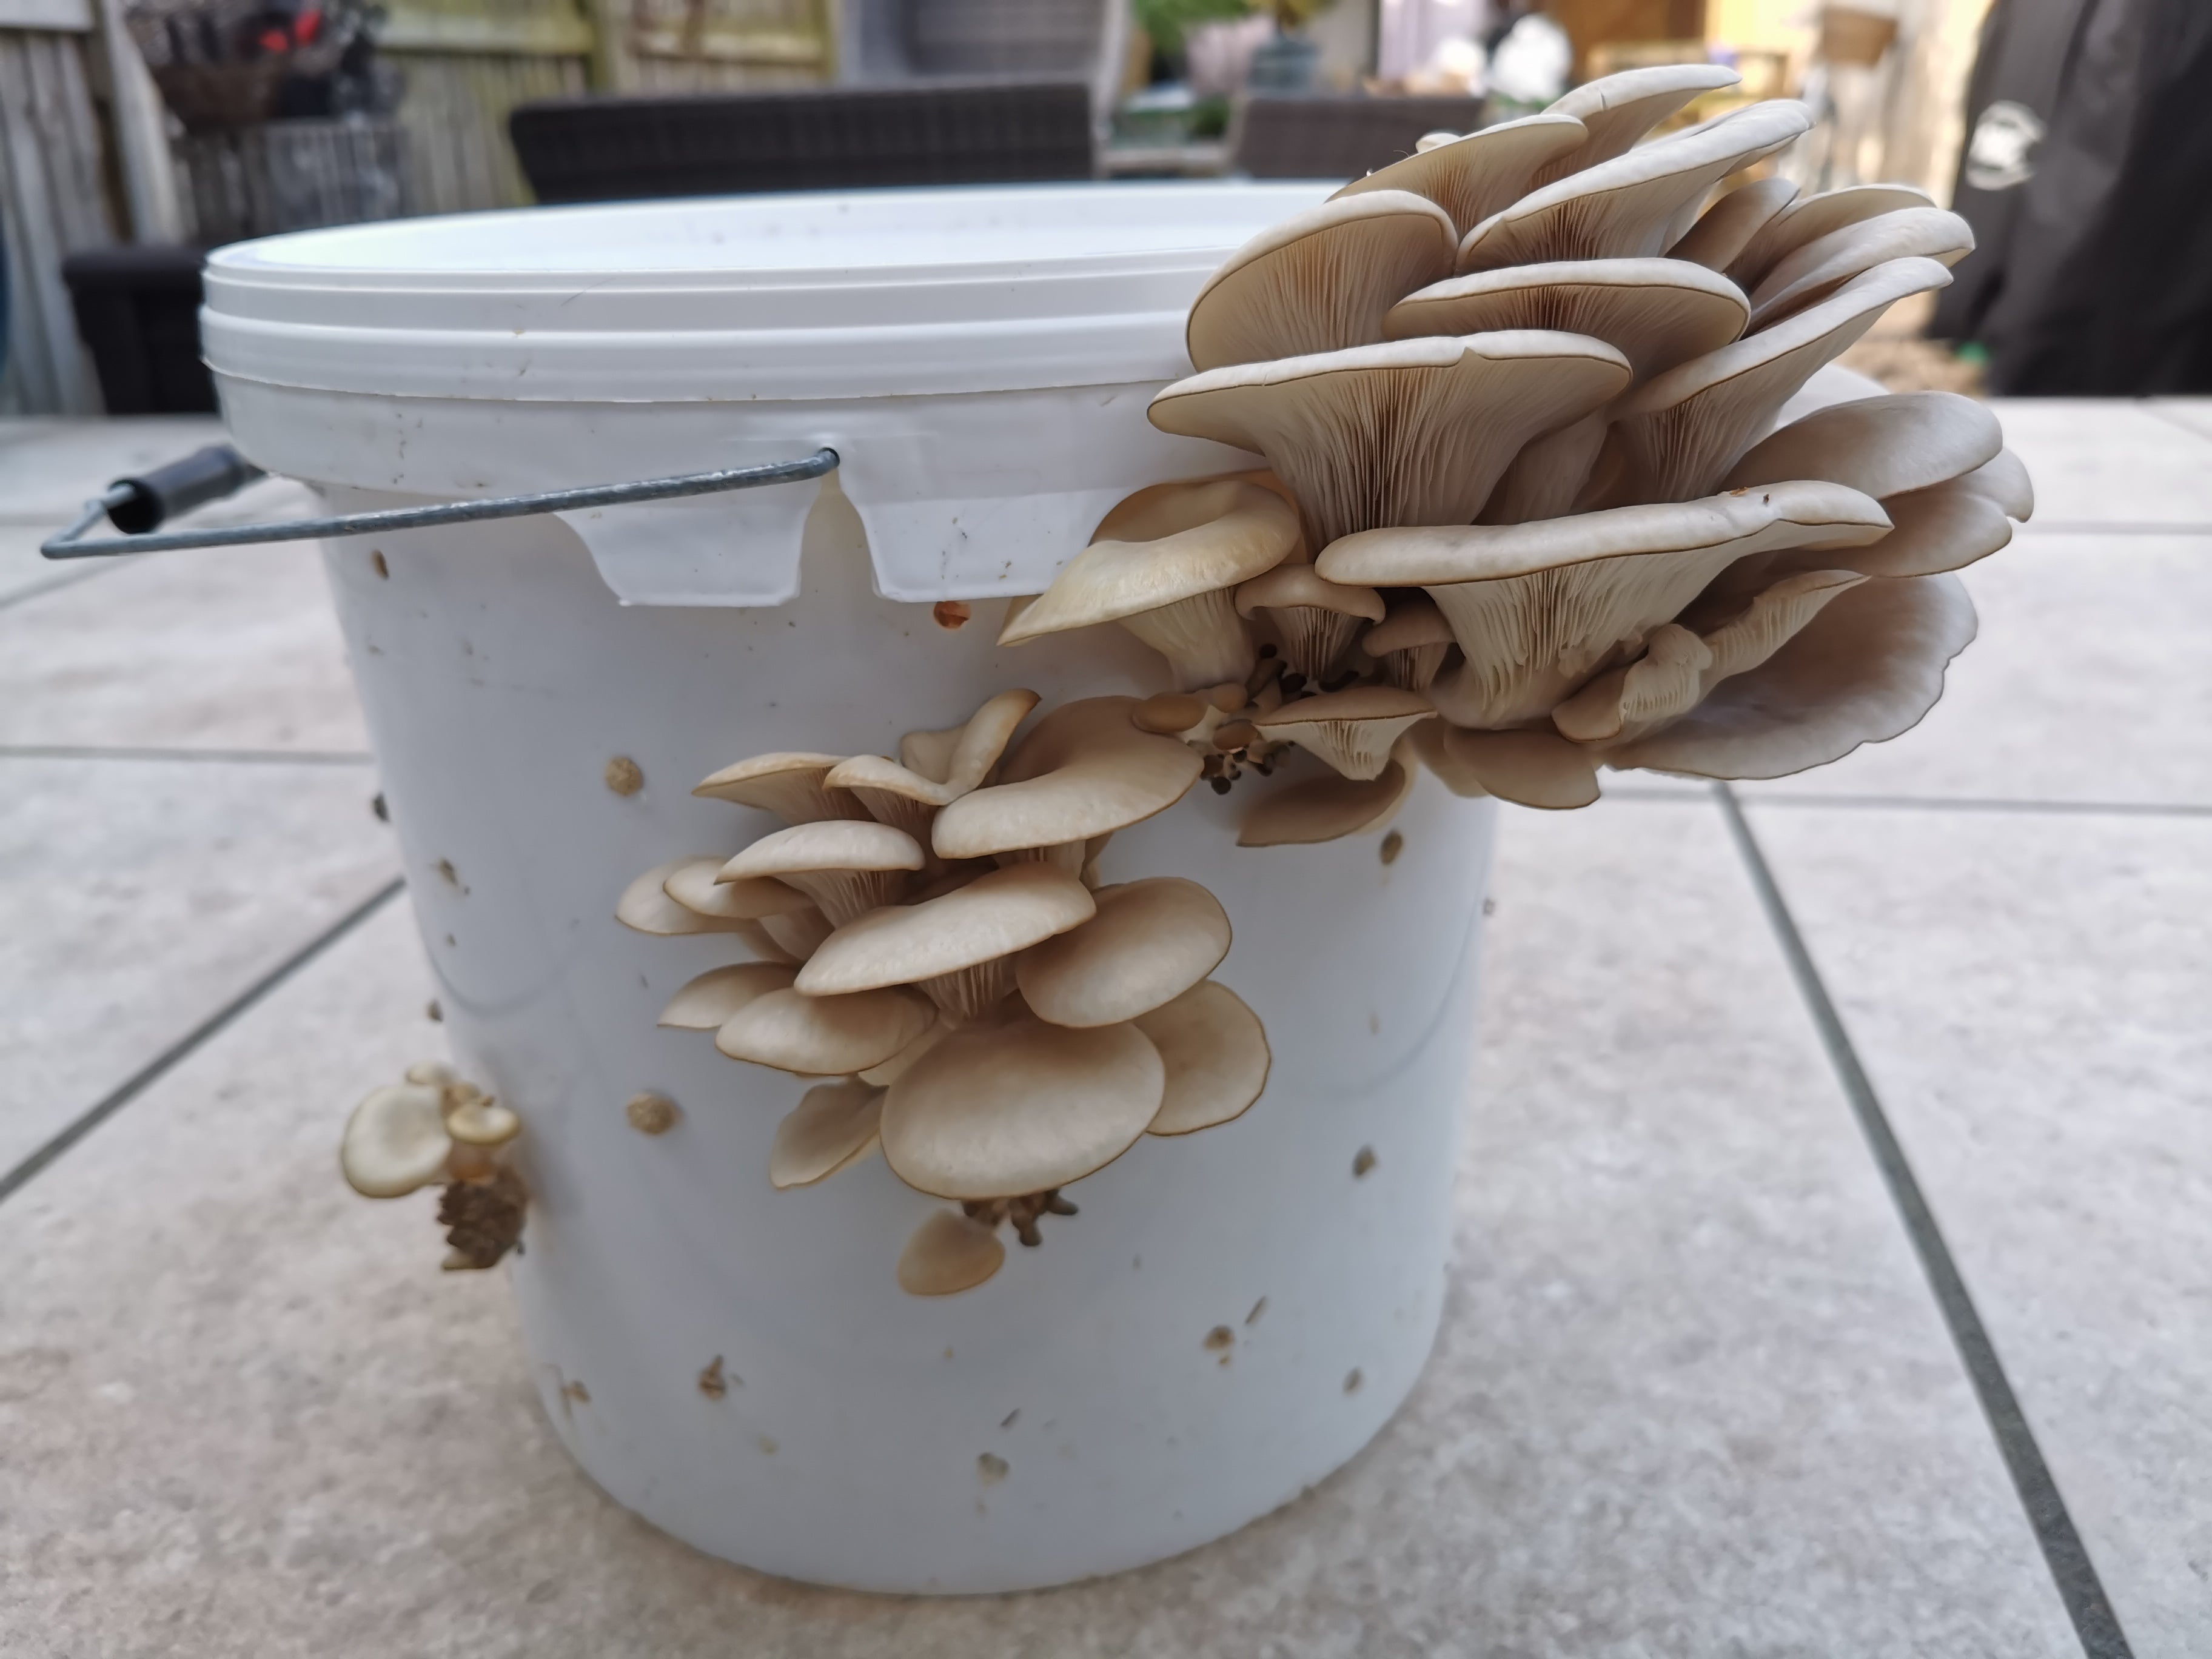  Oyster Mushroom Mycelium Plug Spawn - 100 Count - Grow